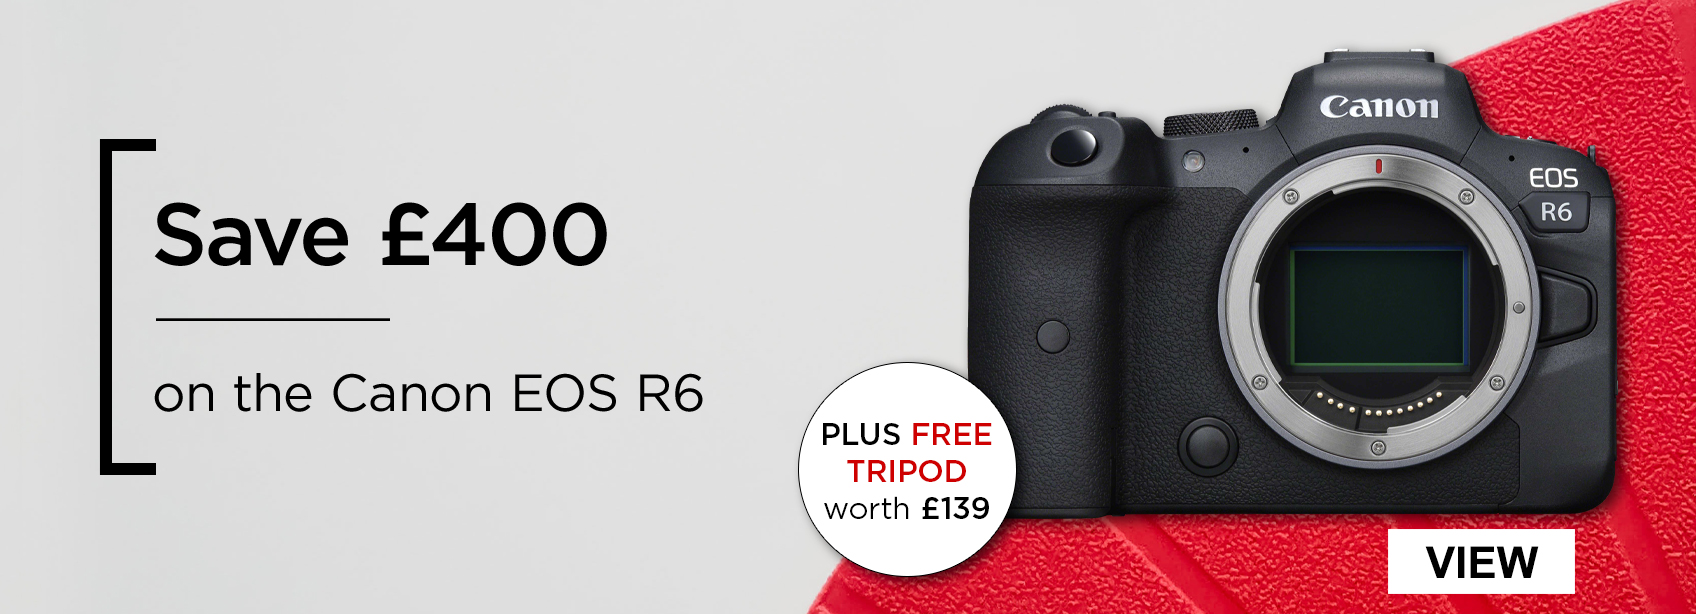 Save £400 on the Canon EOS R6 (Plus free tripod worth £139)